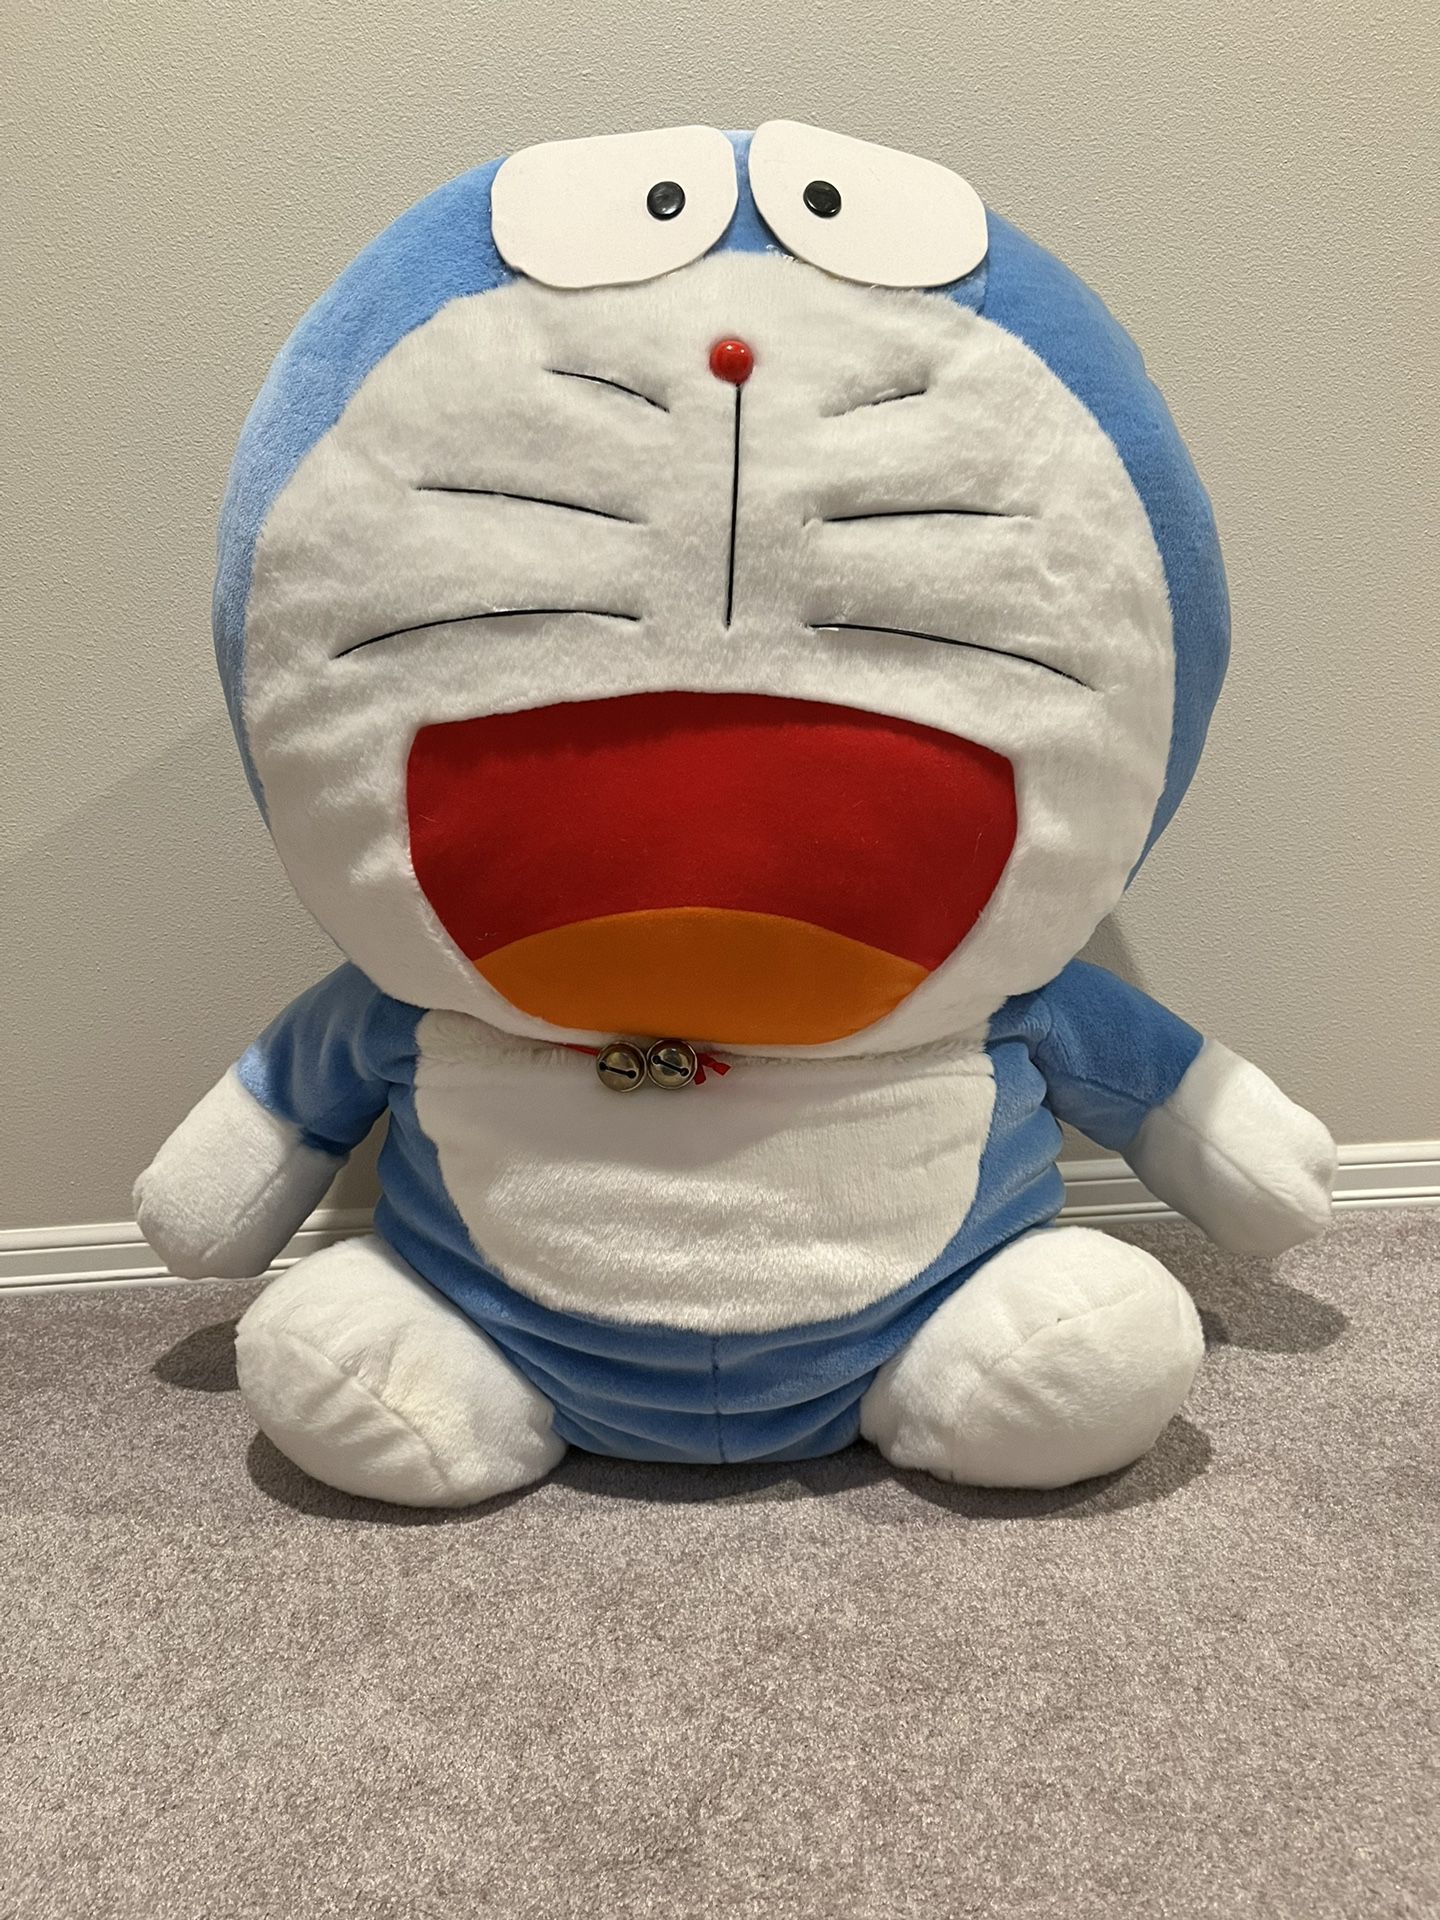 HUGE Doraemon Plush - Nearly 3 Ft Tall